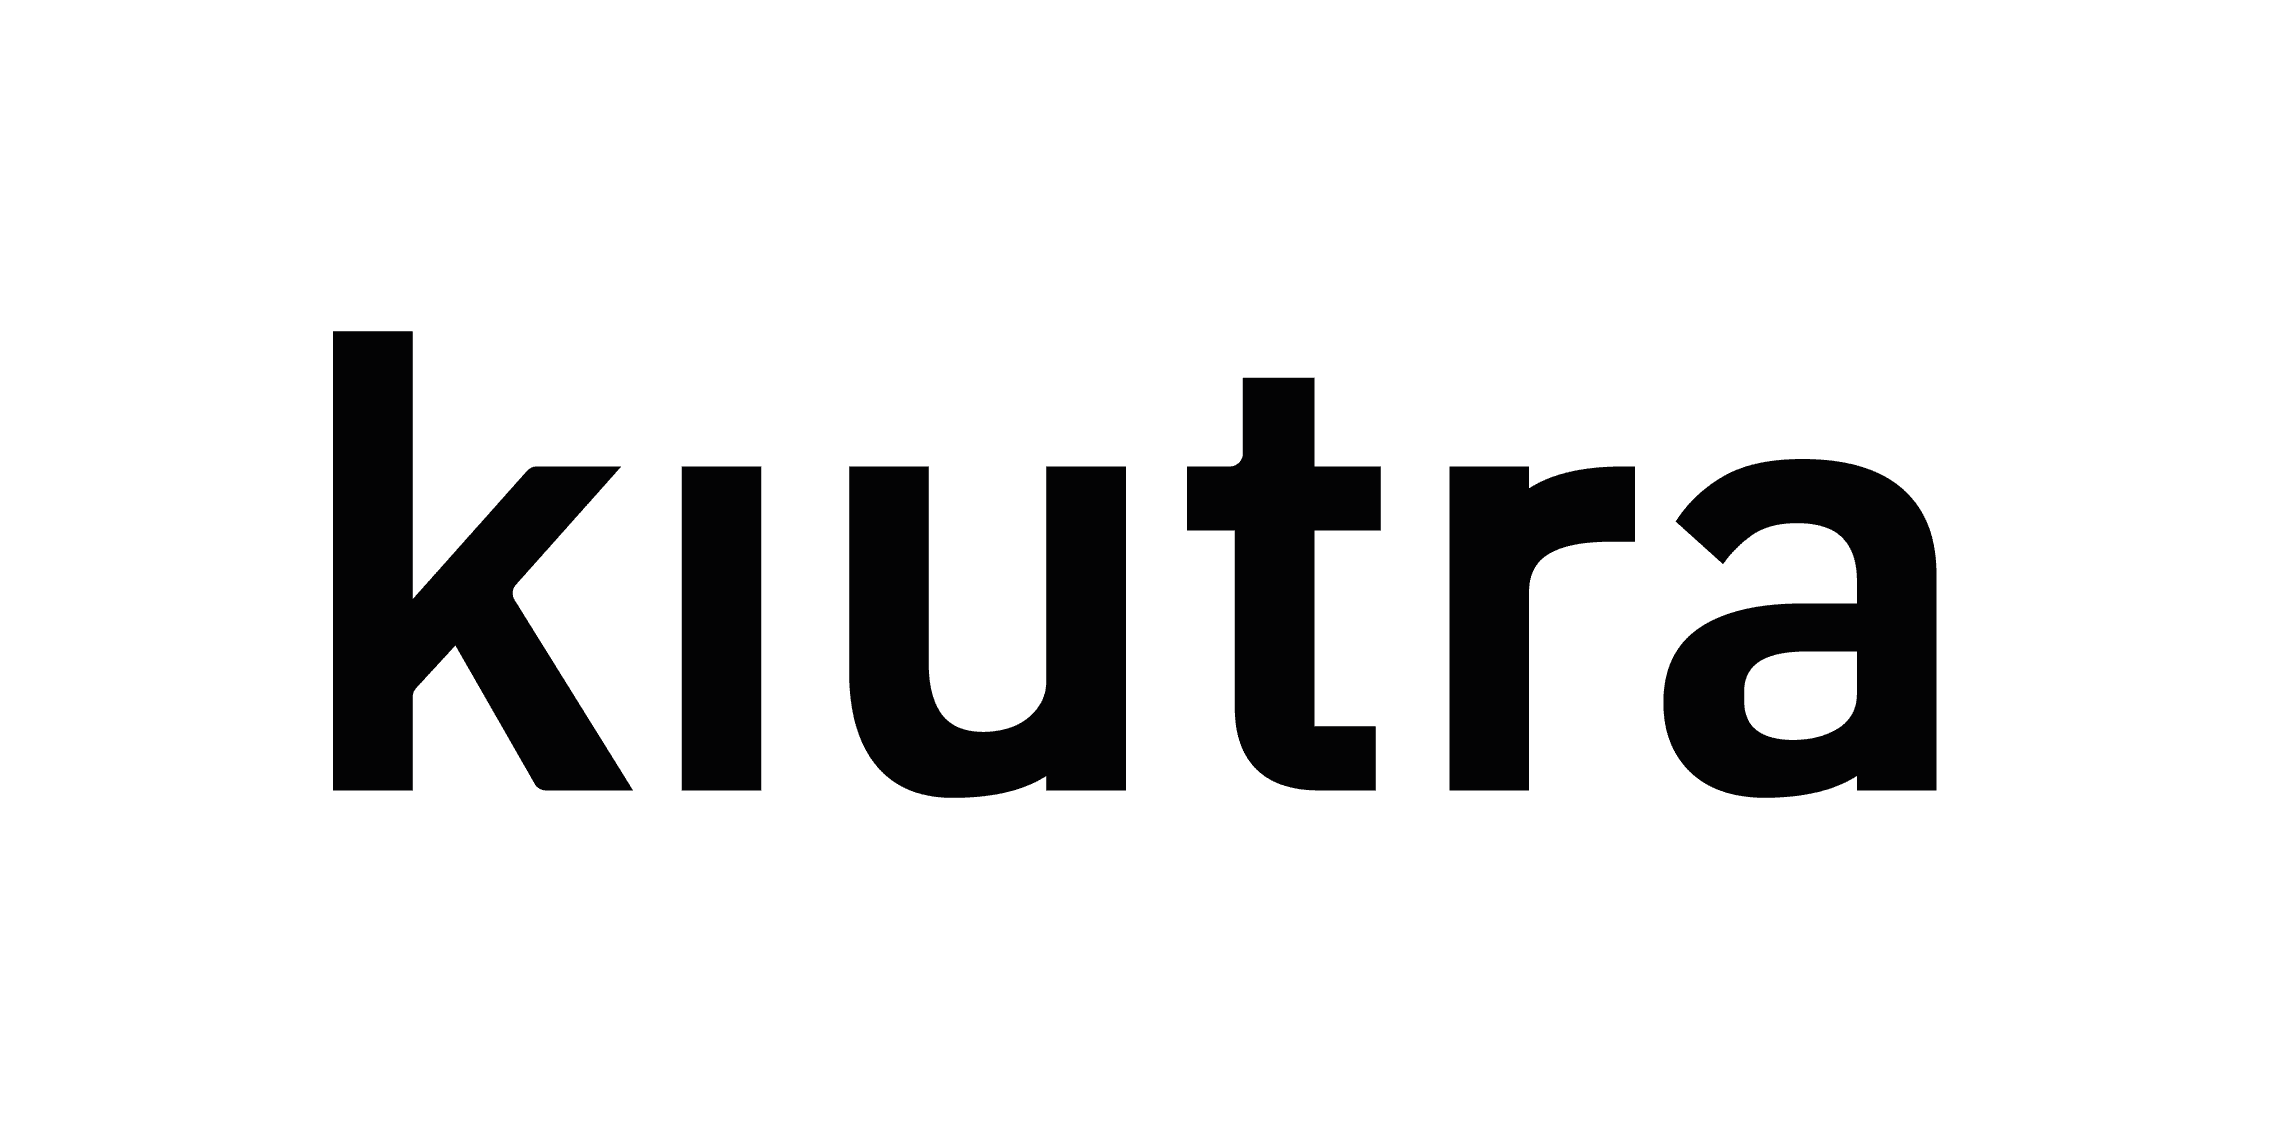 kiutra black logo- Verve Ventures portfolio